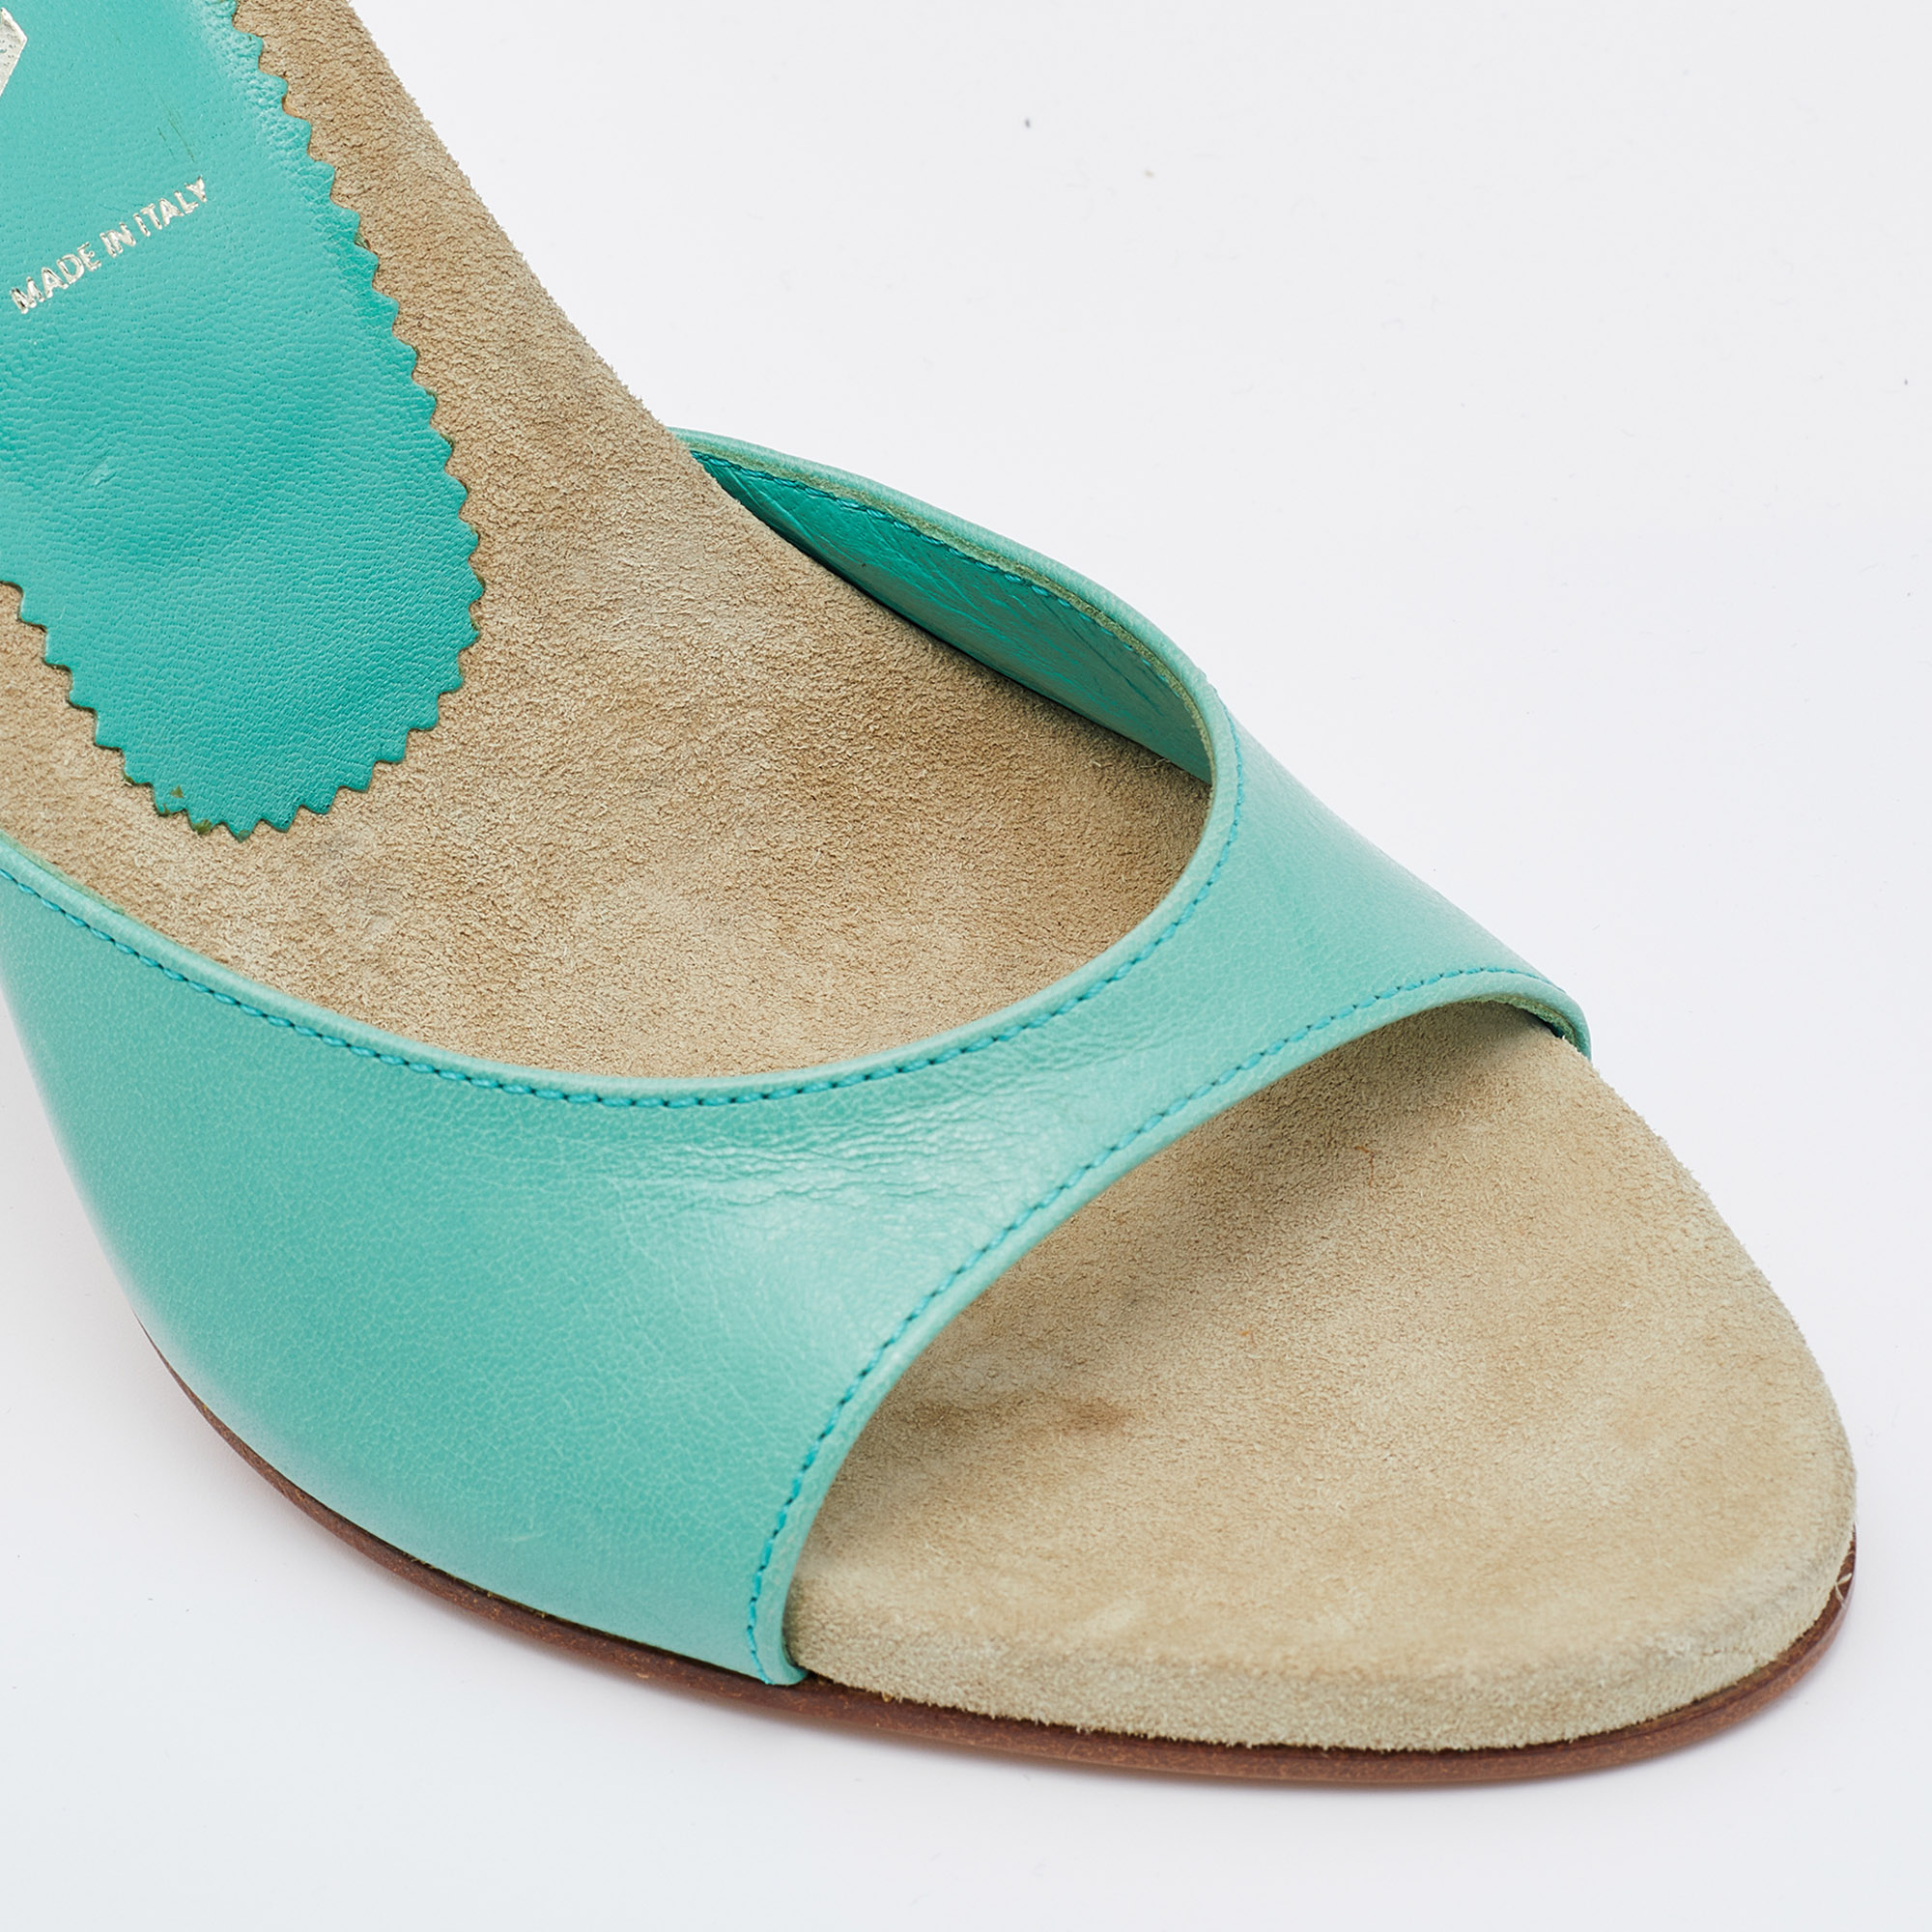 Prada Light Green Leather Slide Sandals Size 37